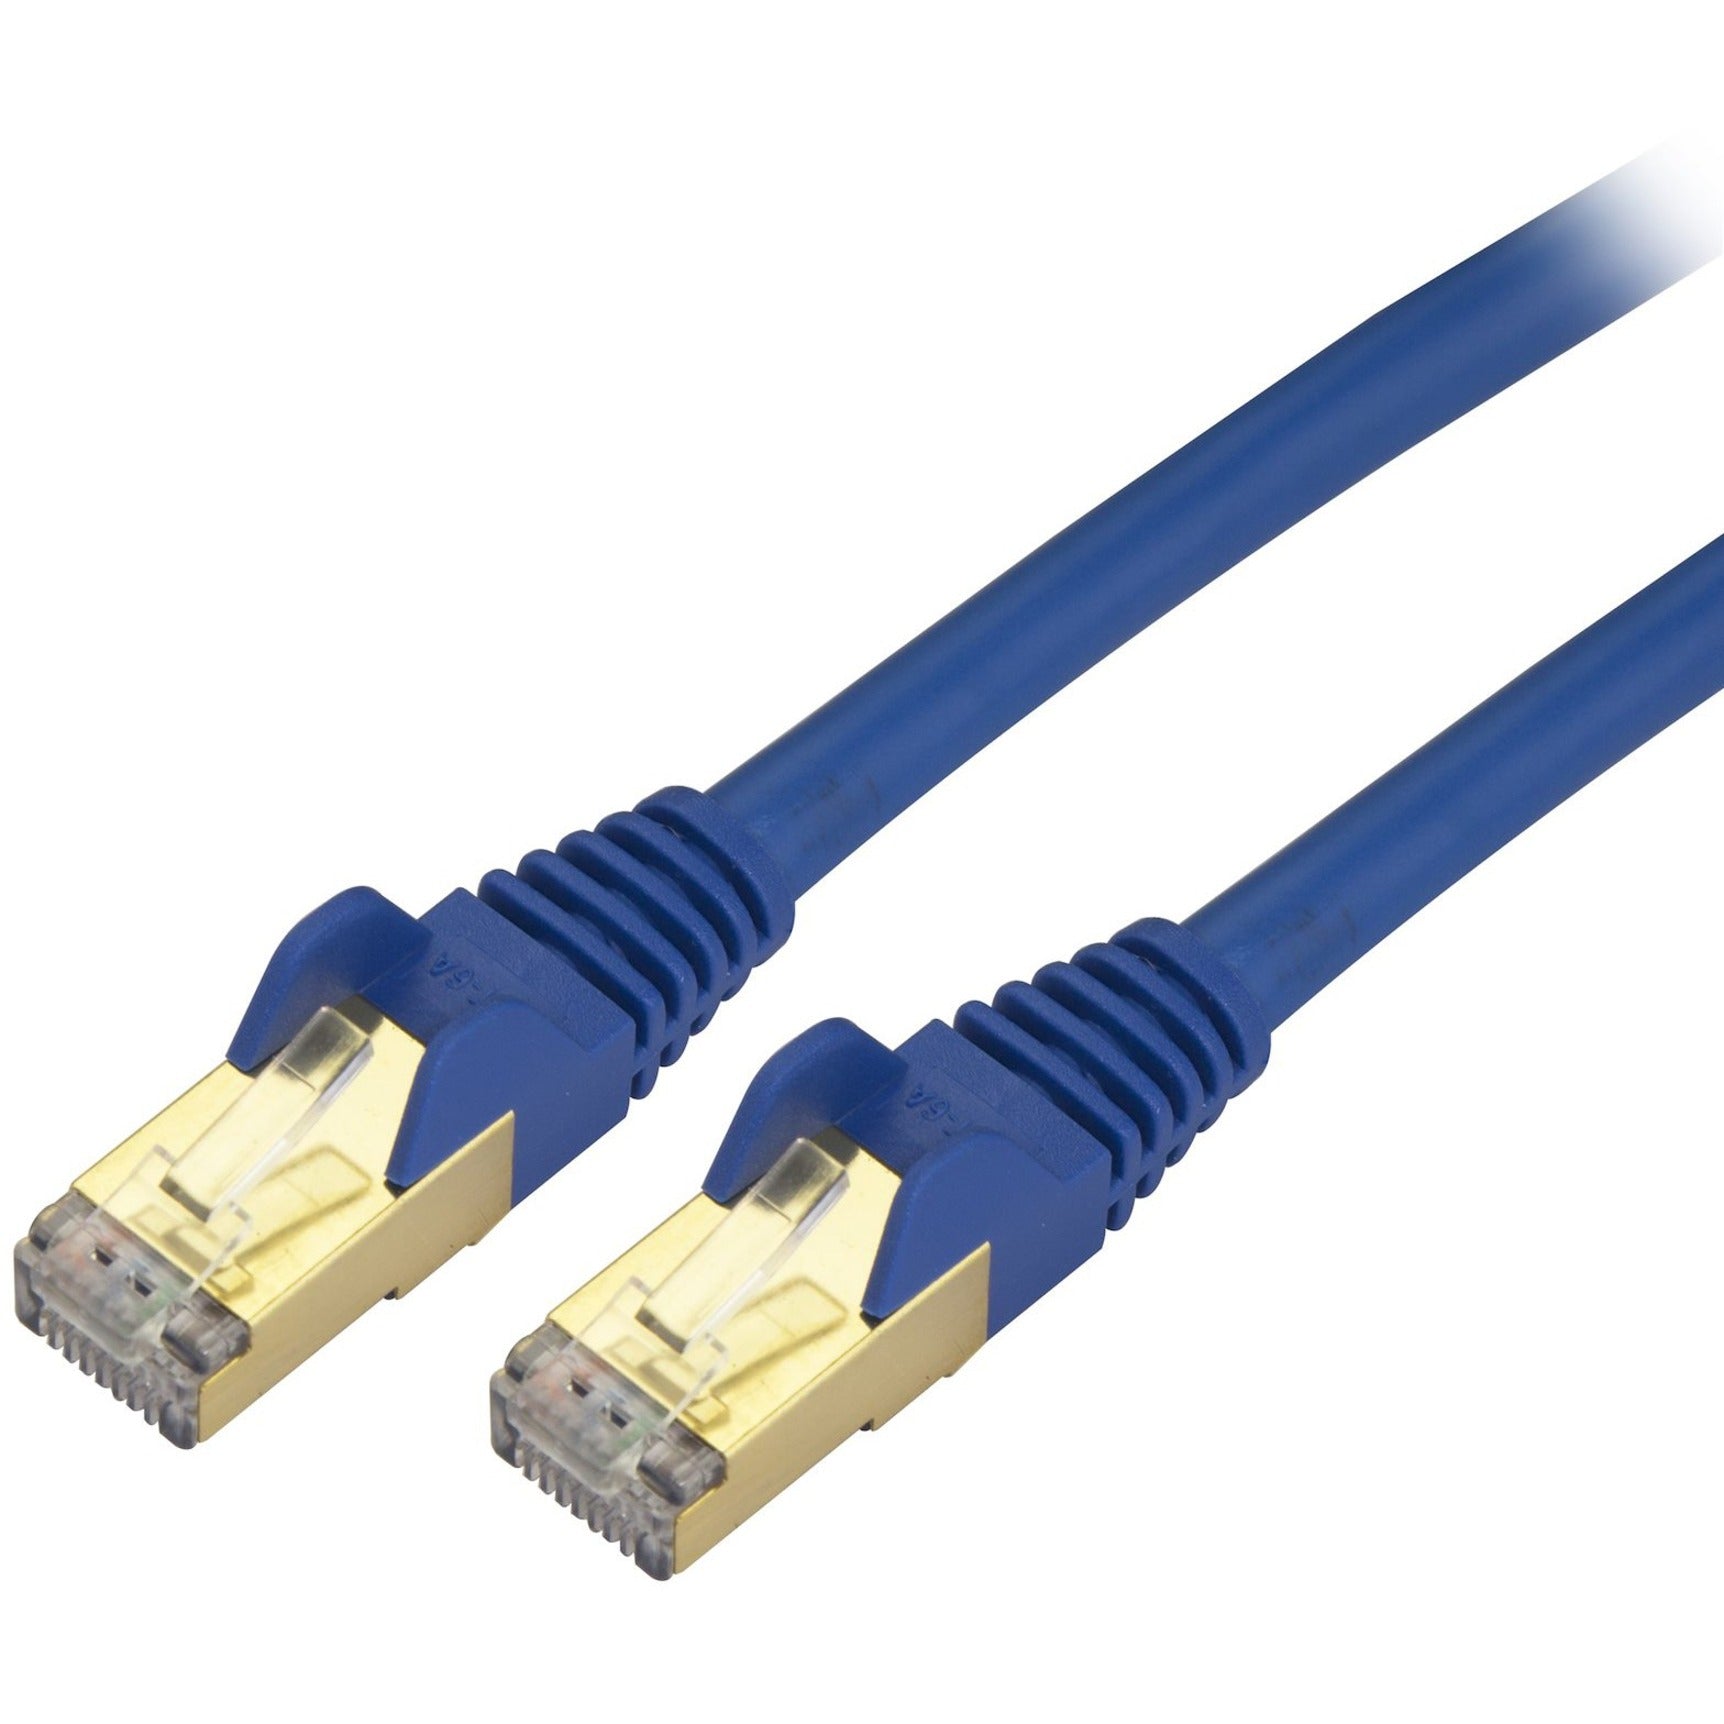 StarTech.com C6ASPAT12BL Cat6a Ethernet Patch Cable - Shielded (STP) - 12 ft., Blue, Snagless RJ45 Ethernet Cord